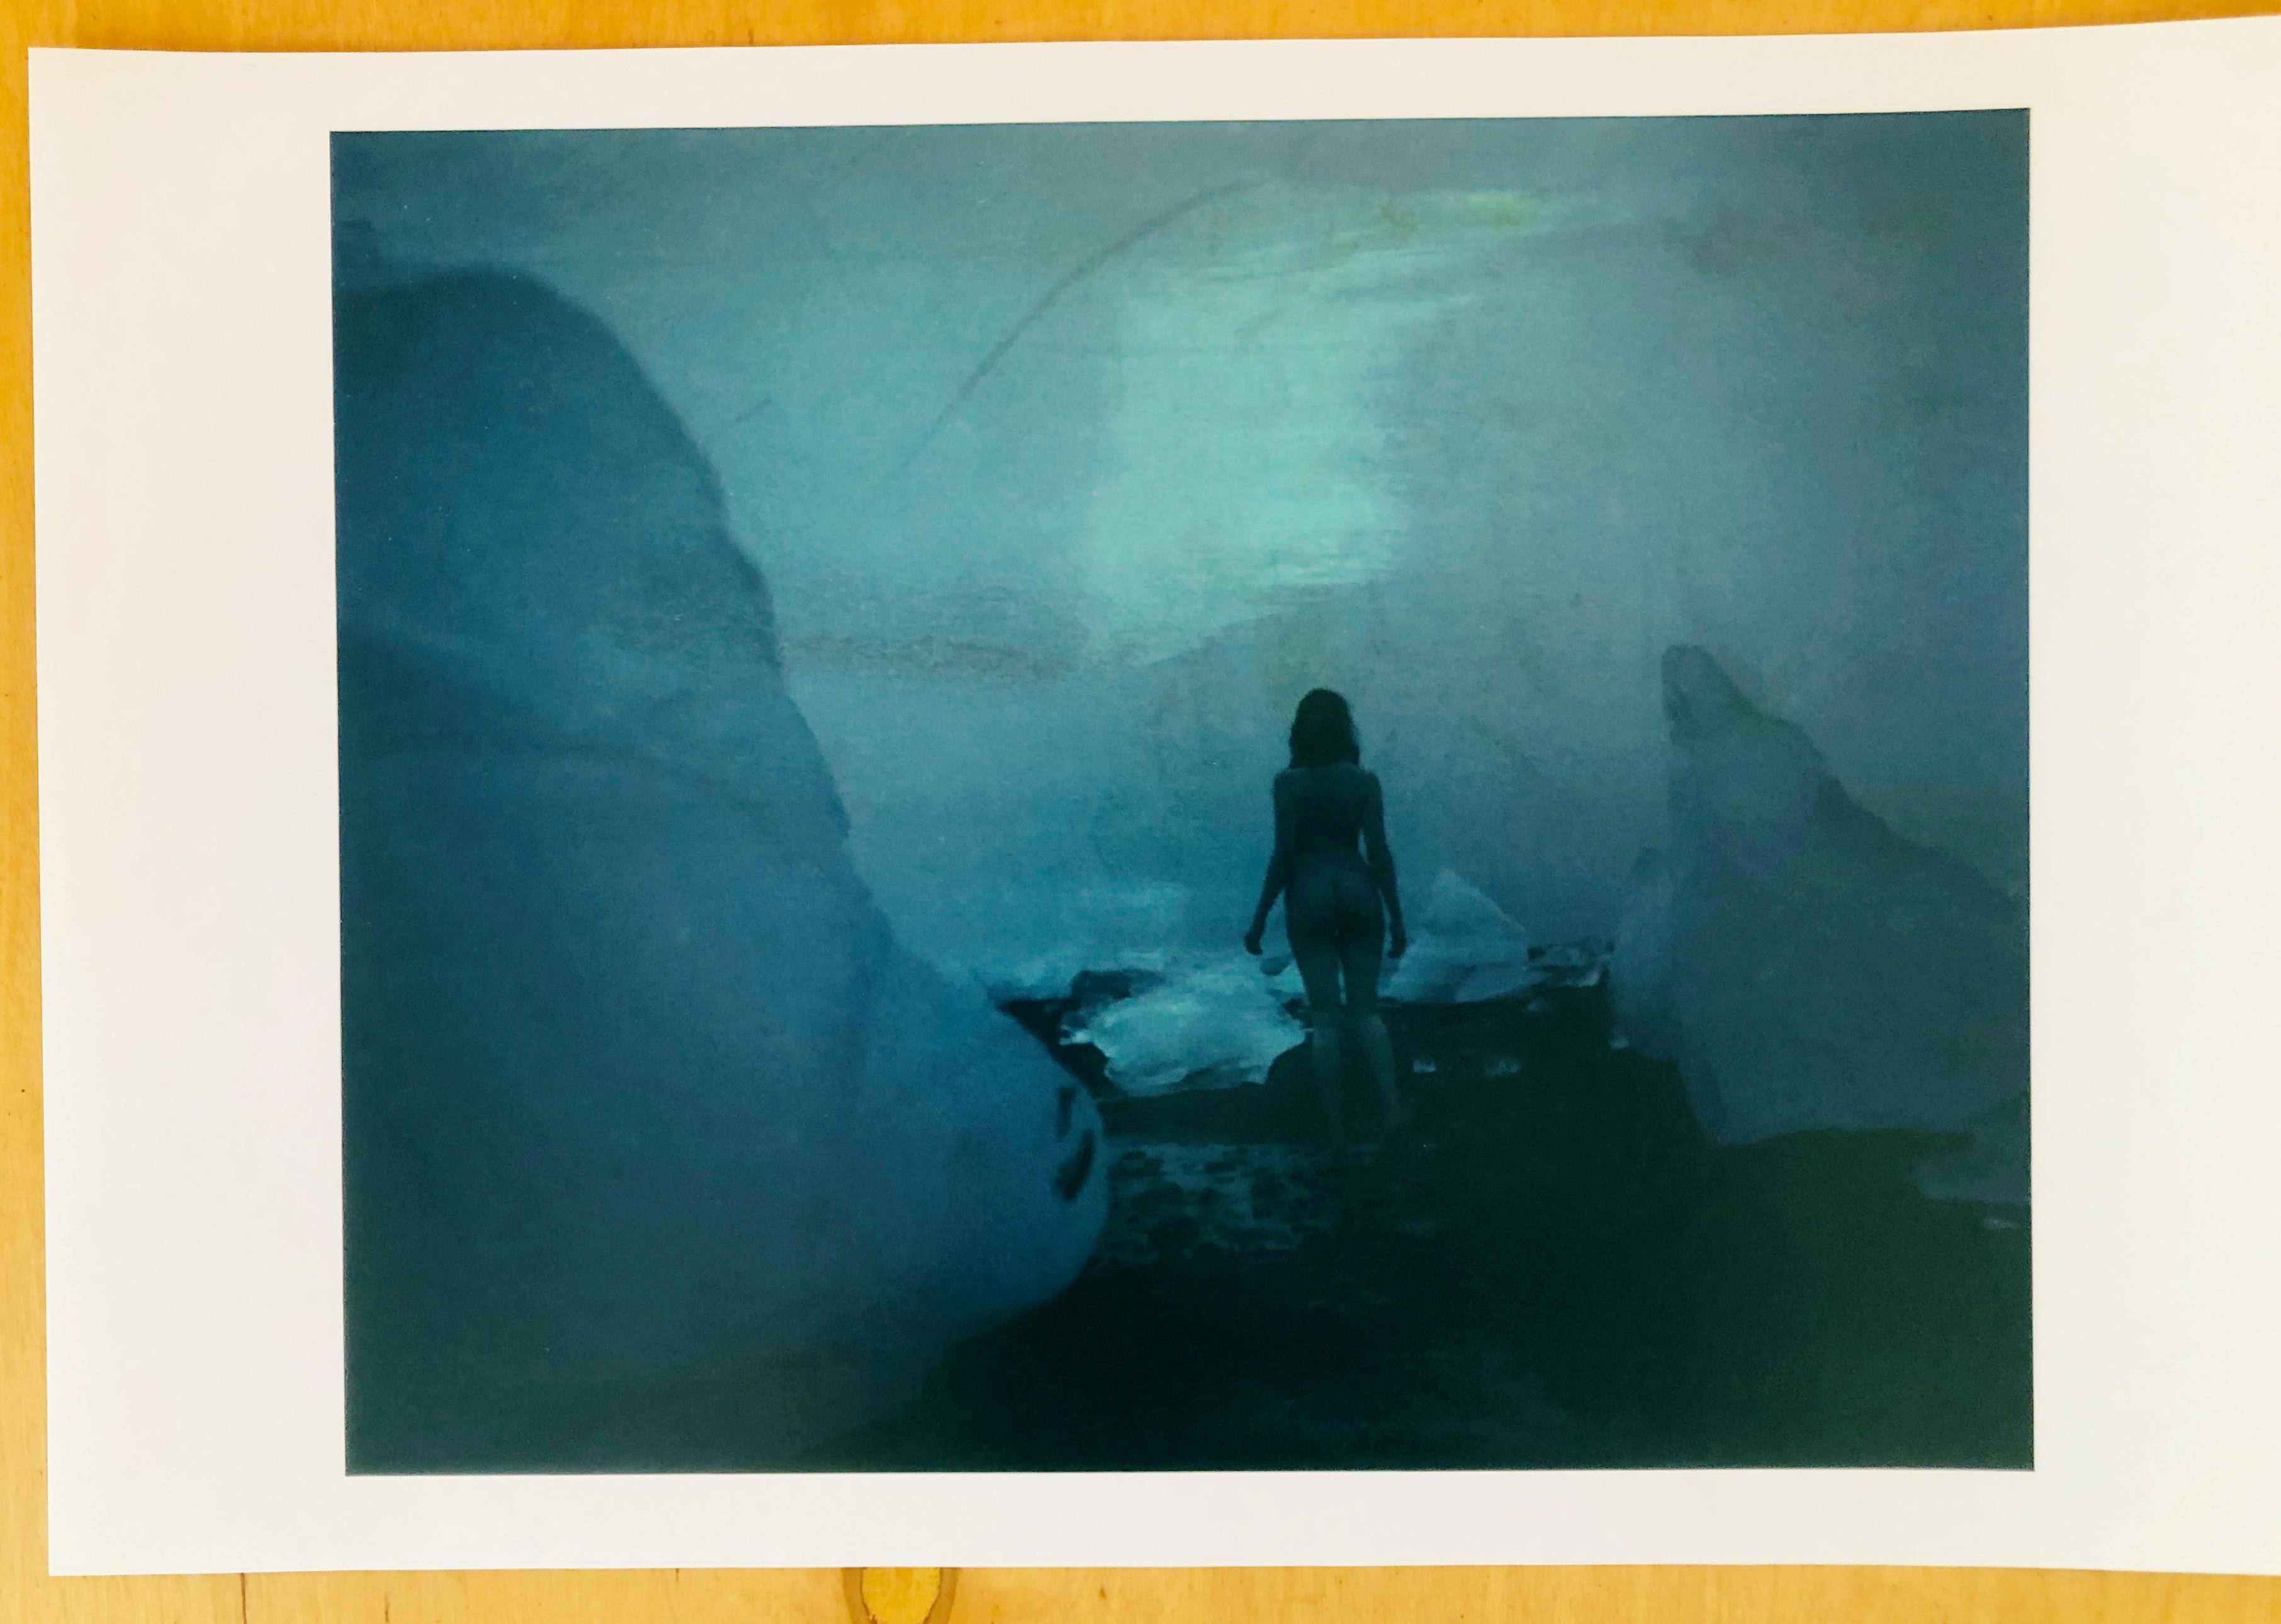 Blue Iceland - Contemporary, Nude, Women, Polaroid, 21st Century - Photograph by Sven van Driessche